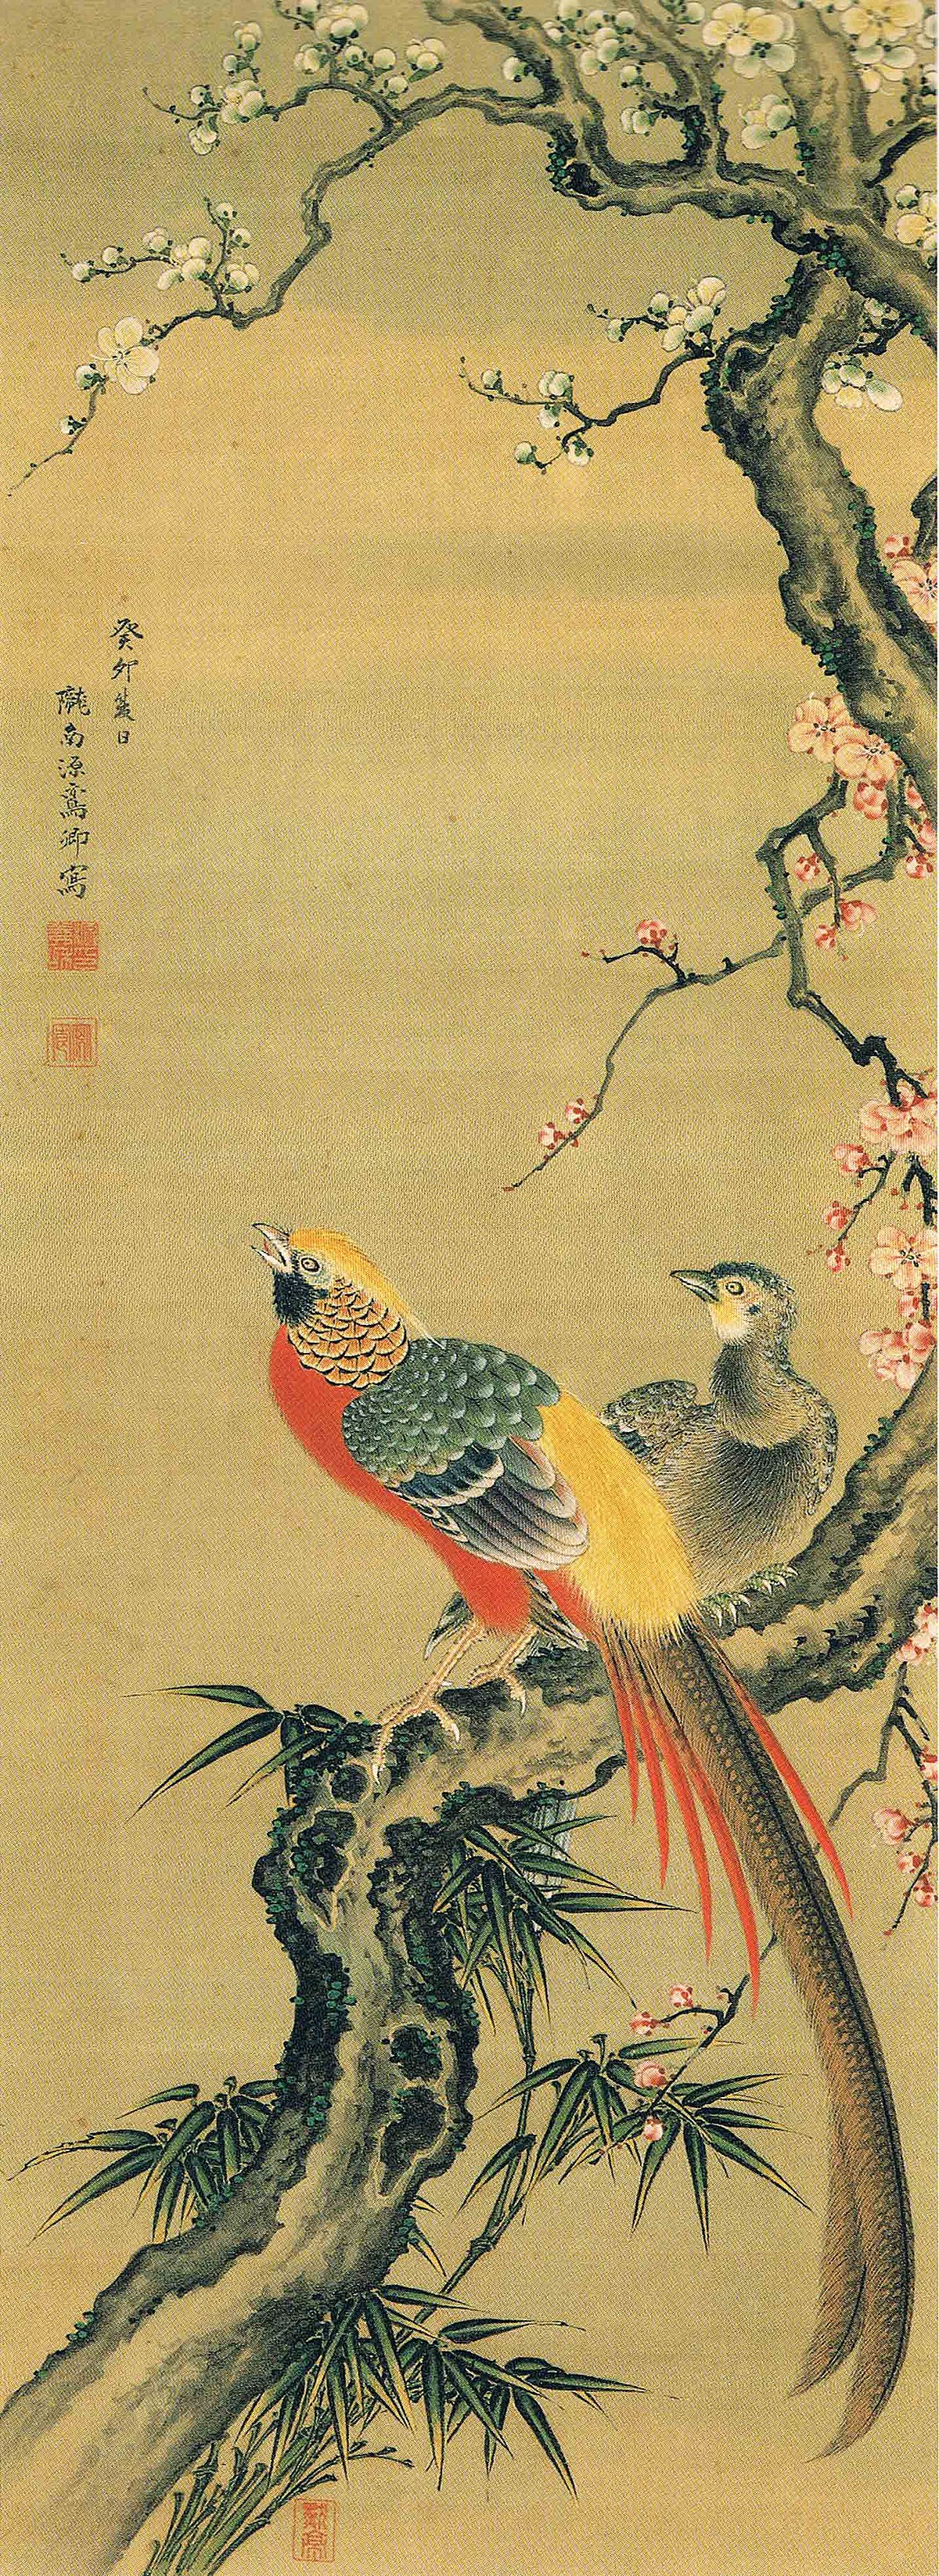 File:源鶯卿-梅に金鶏鳥図.jpg - Wikimedia Commons